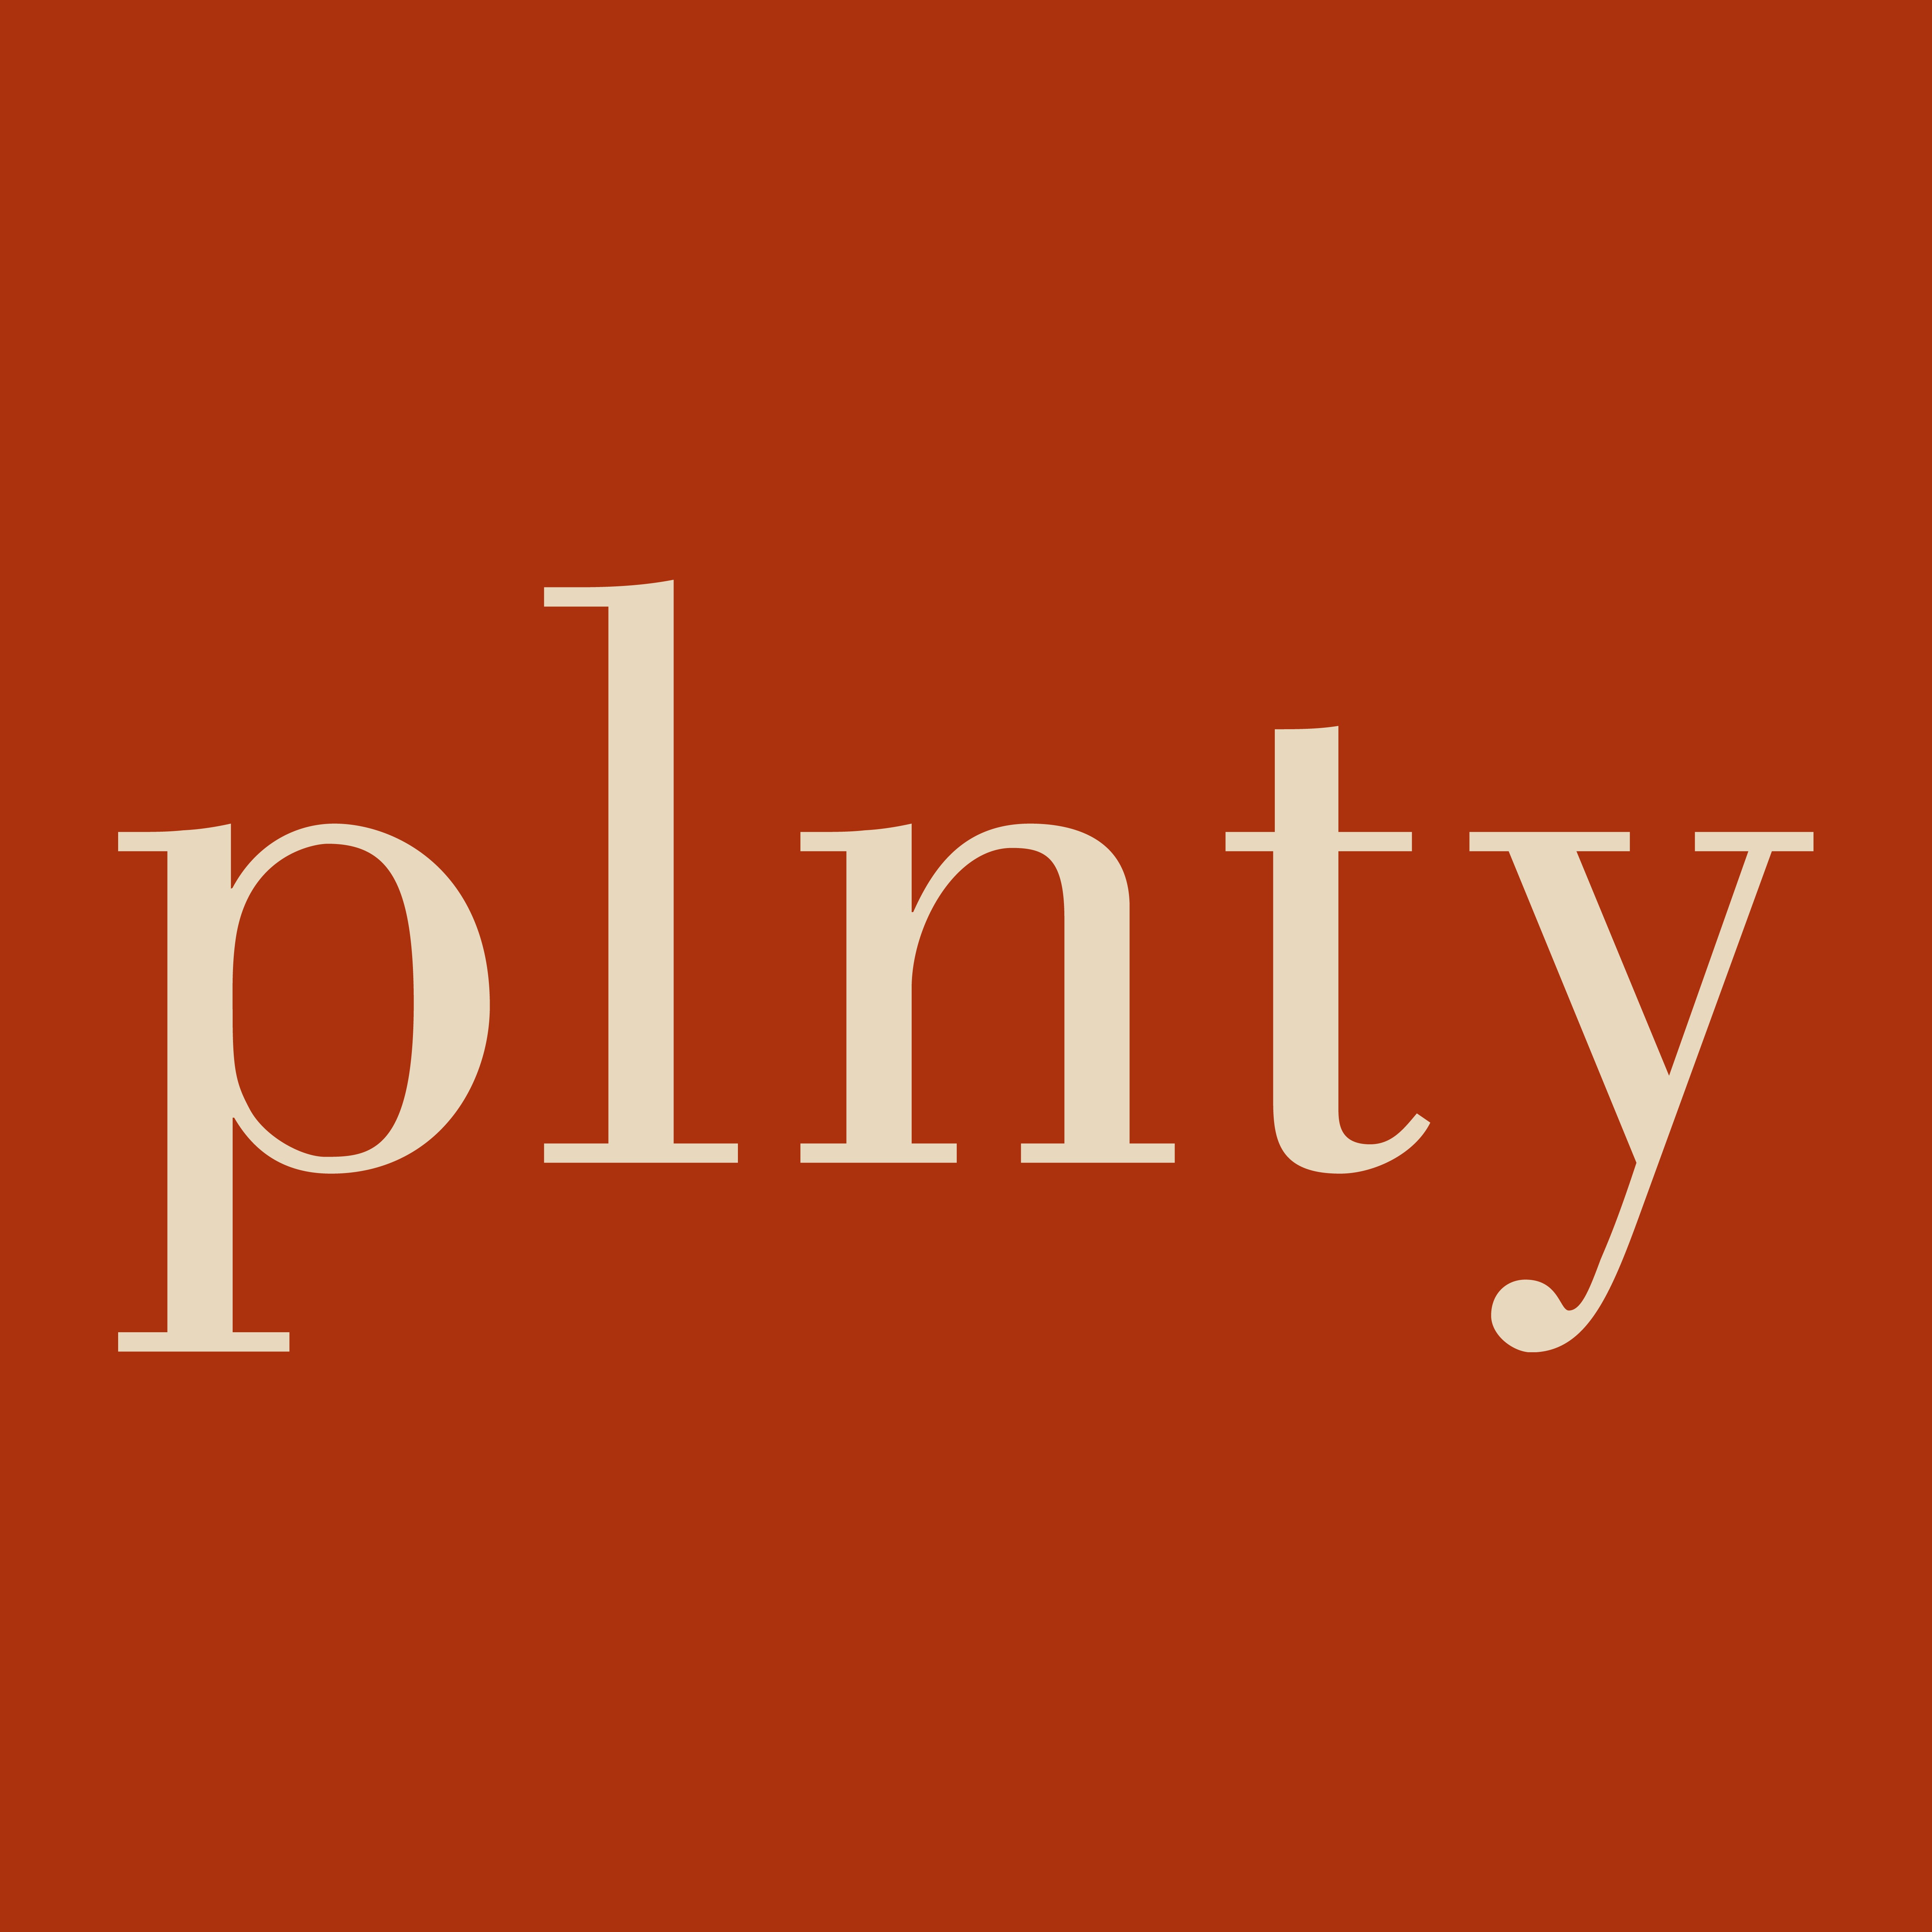 Plnty